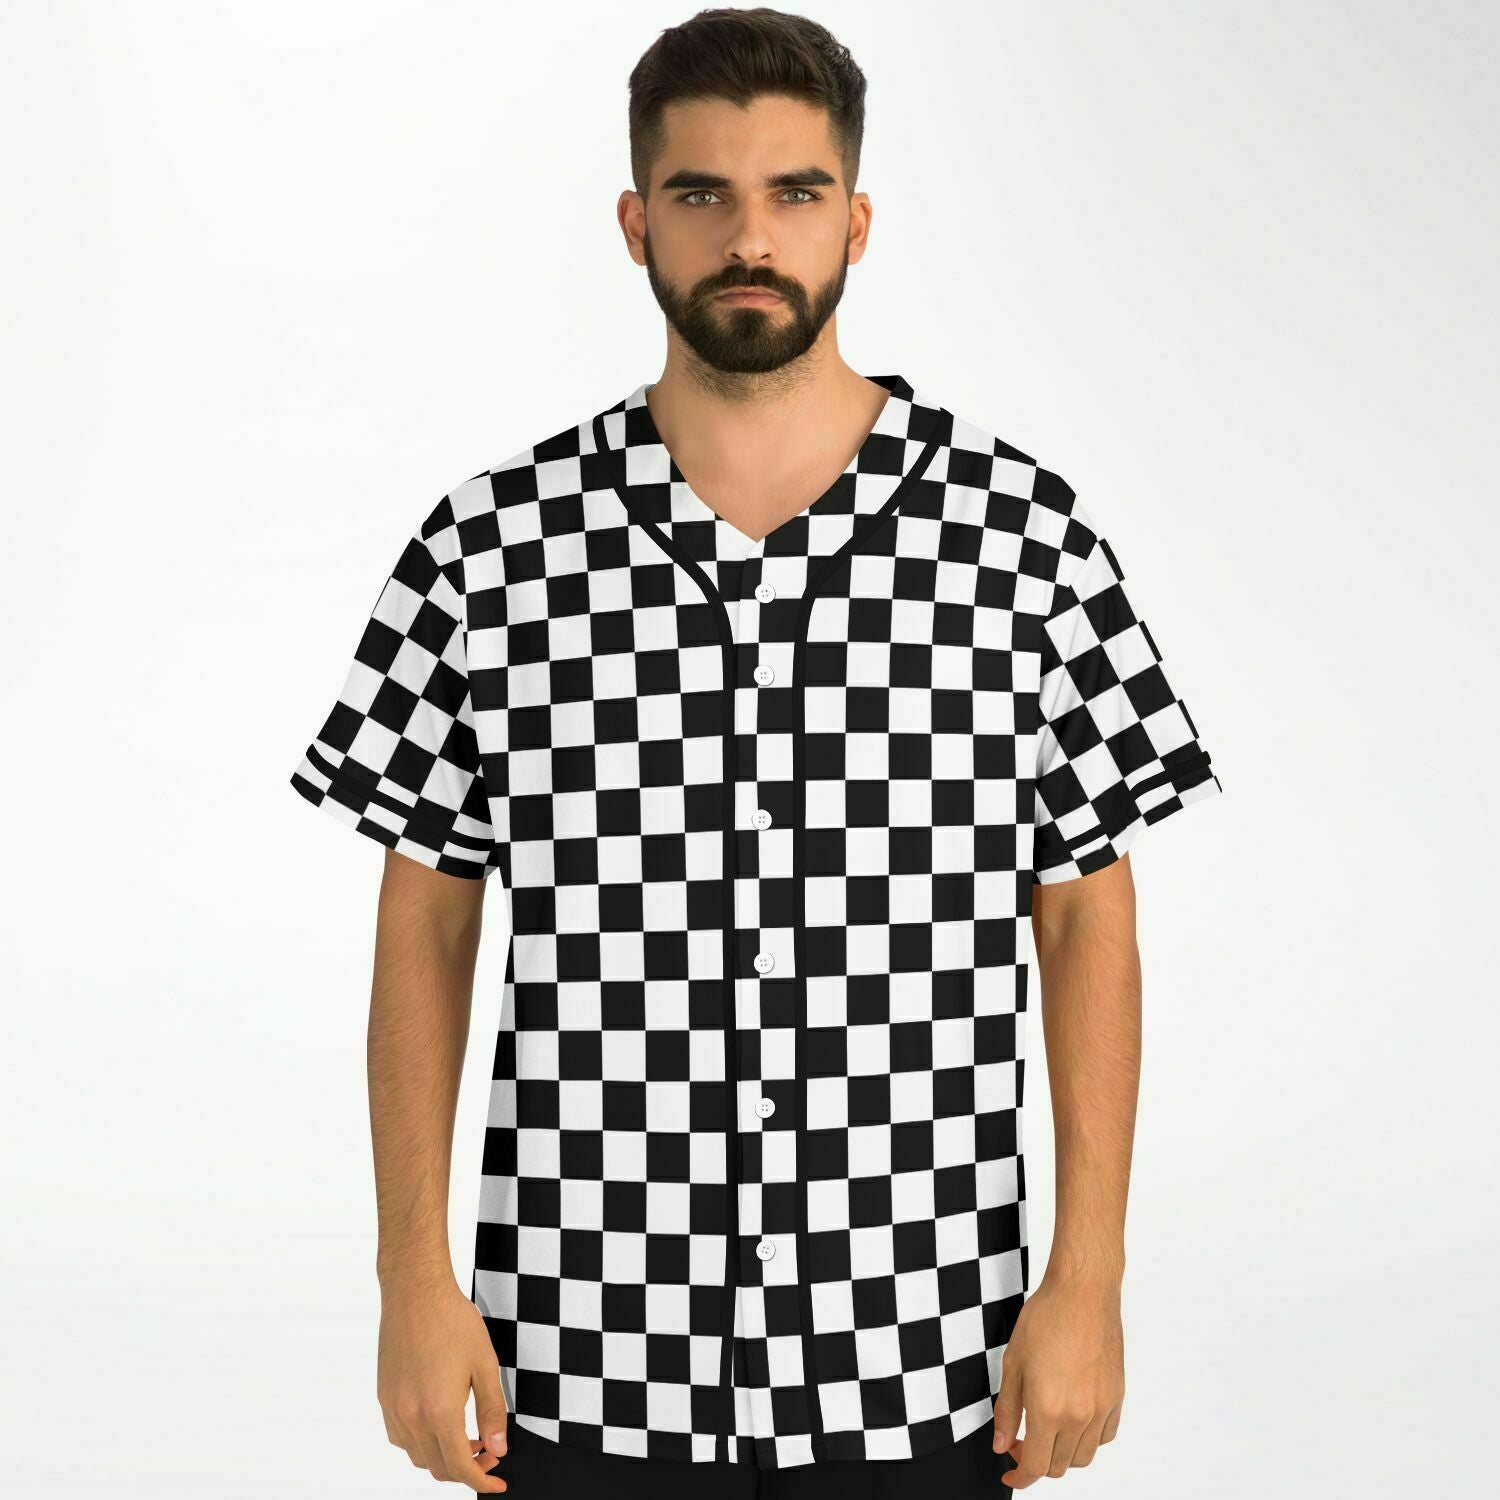 Checkered Baseball Jersey Shirt, Black White Check Men Women Unisex Vintage Season Coach Player Moisture Wicking Tshirt Starcove Fashion